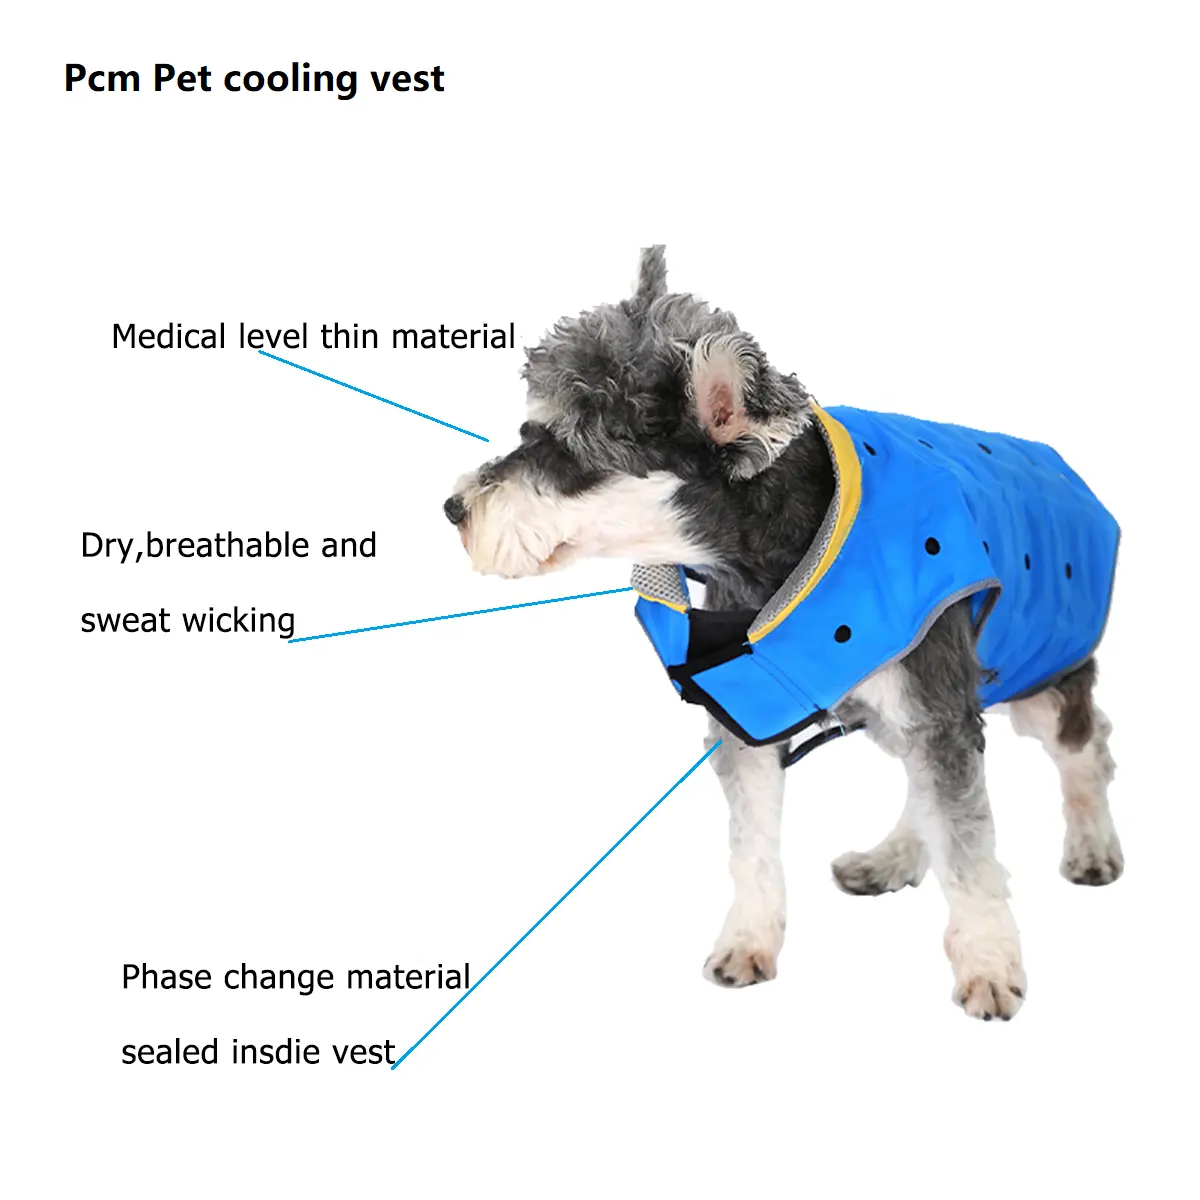 Neue Technologie PCM Pet Cooling Hunde kleidung für Tiere Sommer